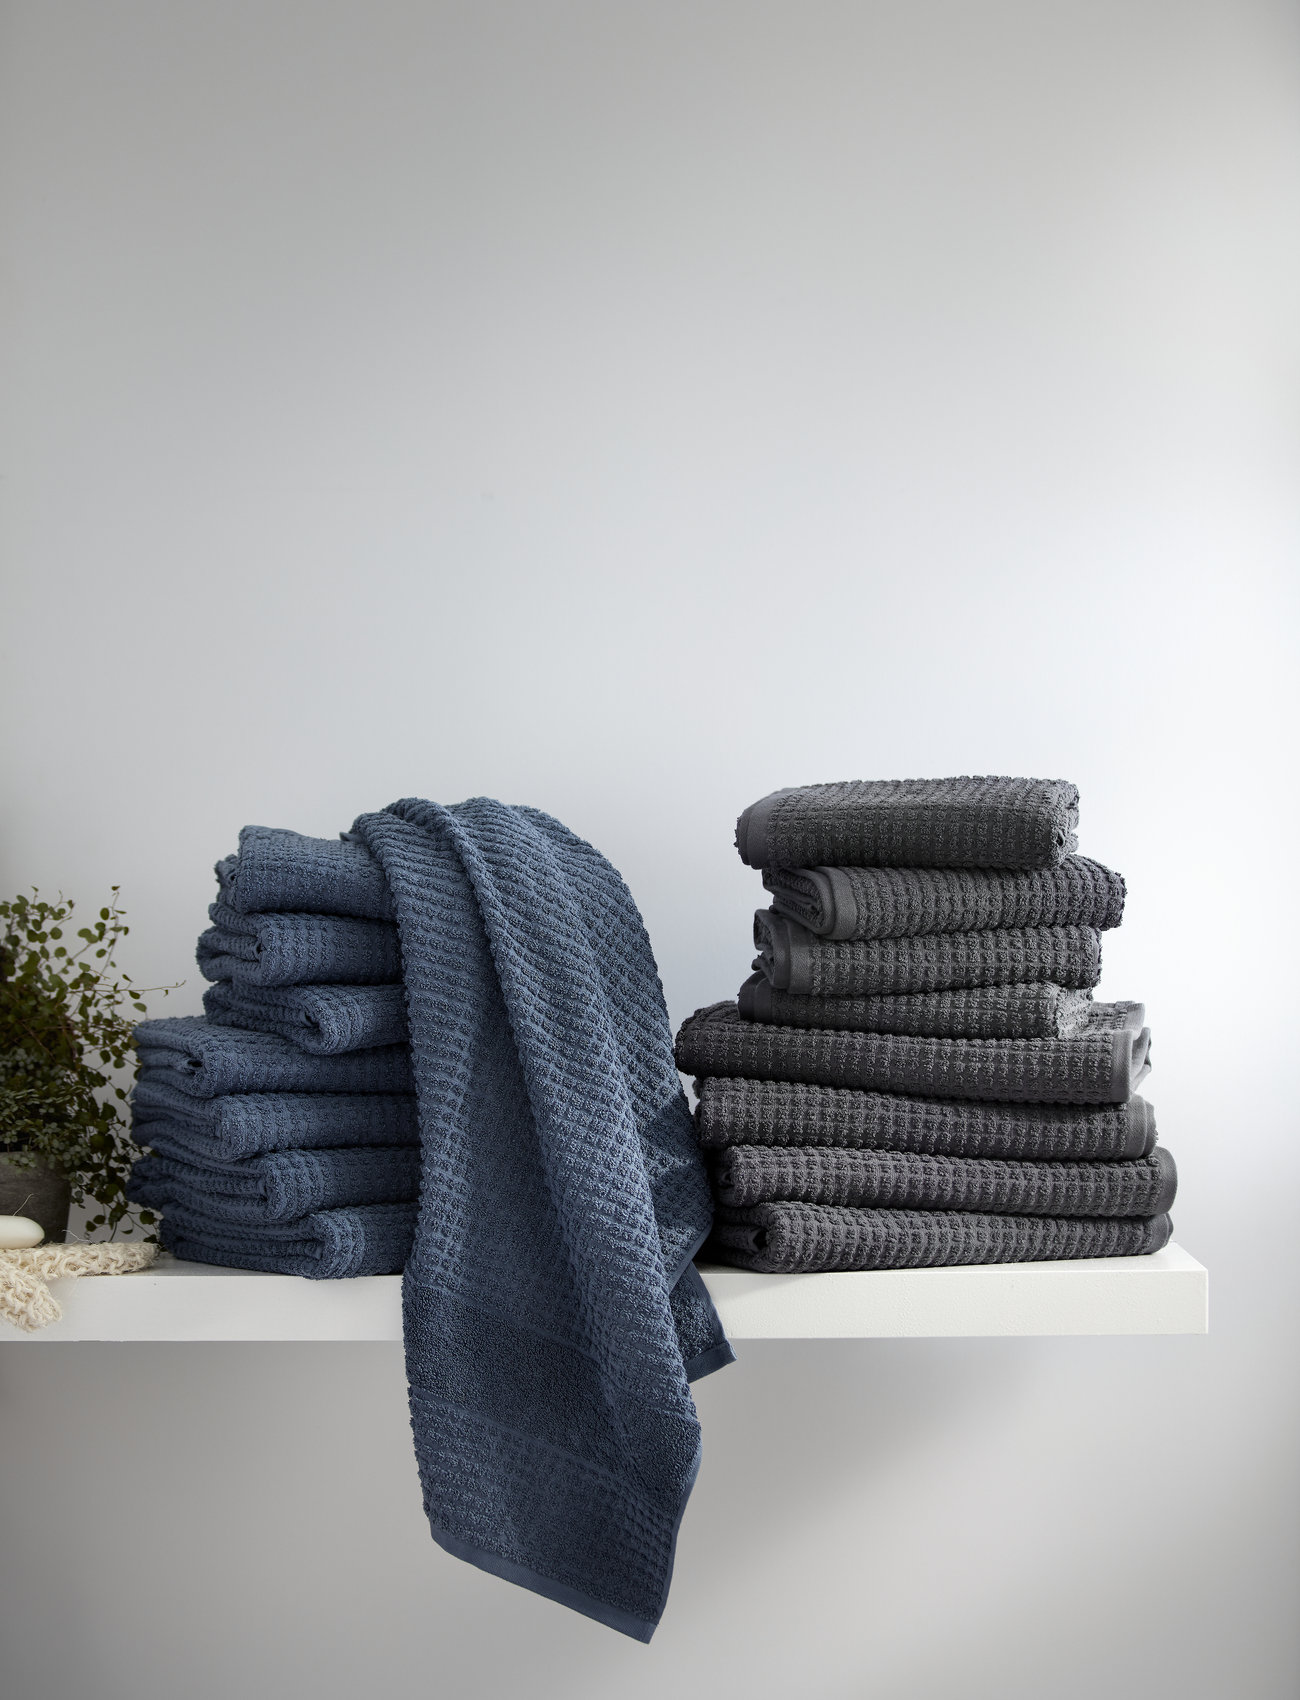 Juna - Check Towels 70x140 4 pcs, 50x100 2 pcs (615057-58)dark grey - lowest prices - dark grey - 1